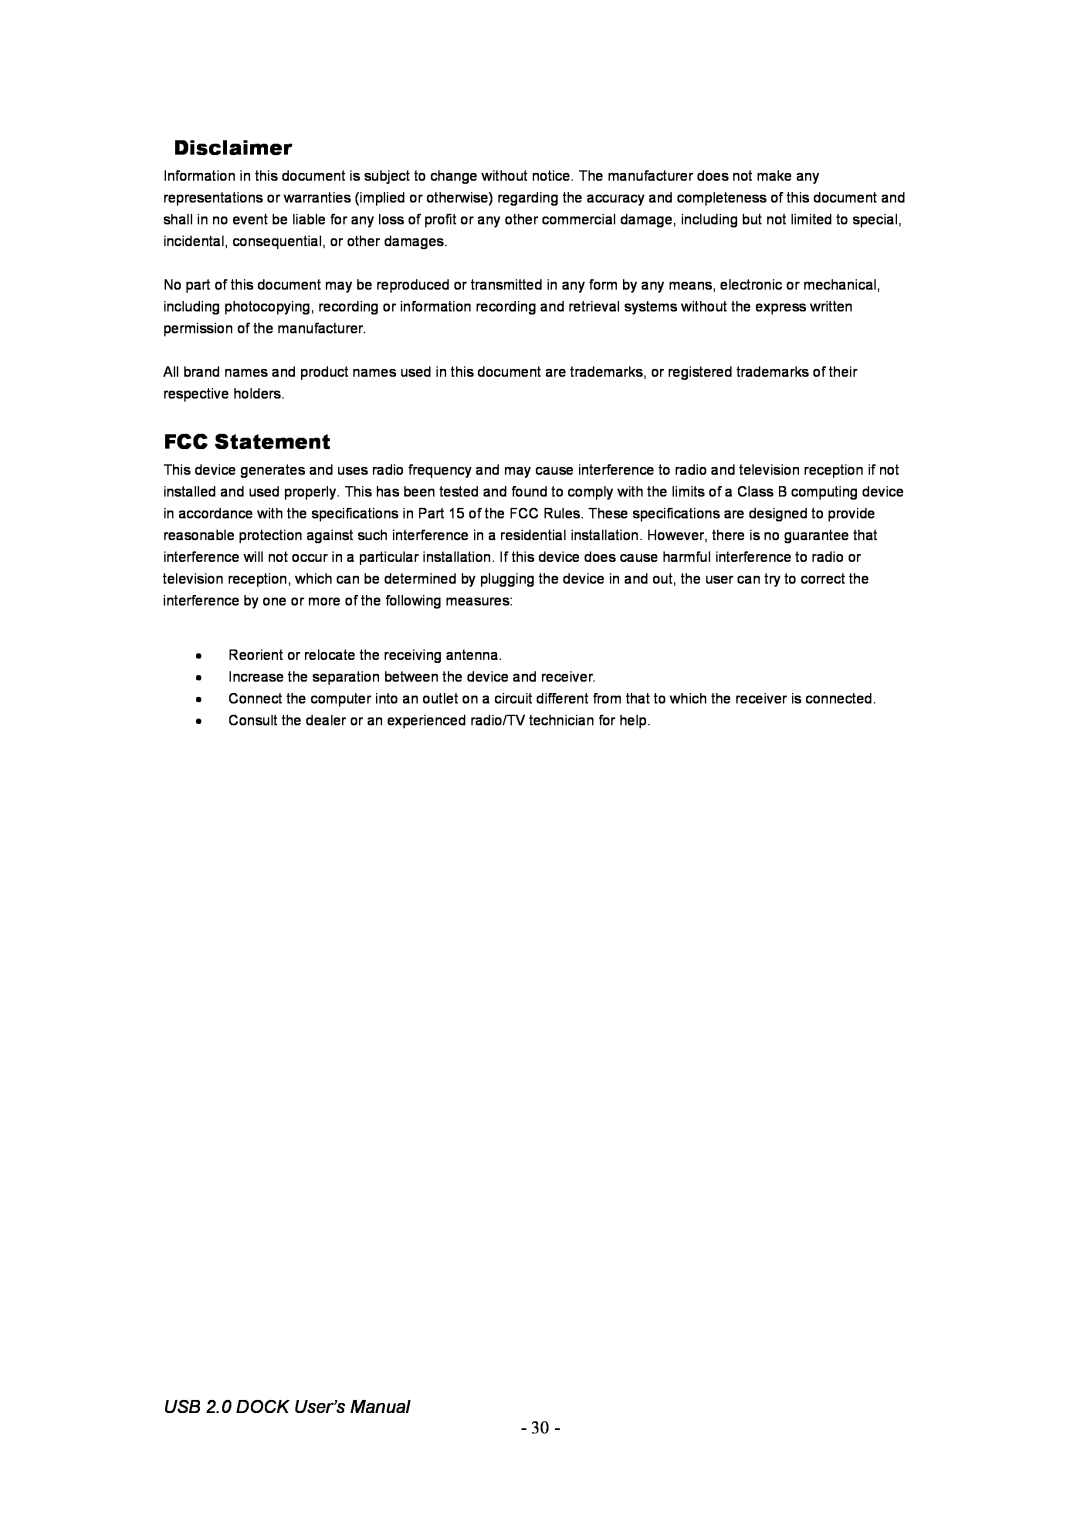 Jameco Electronics 527822 manual Disclaimer, FCC Statement, USB 2.0 DOCK User’s Manual 